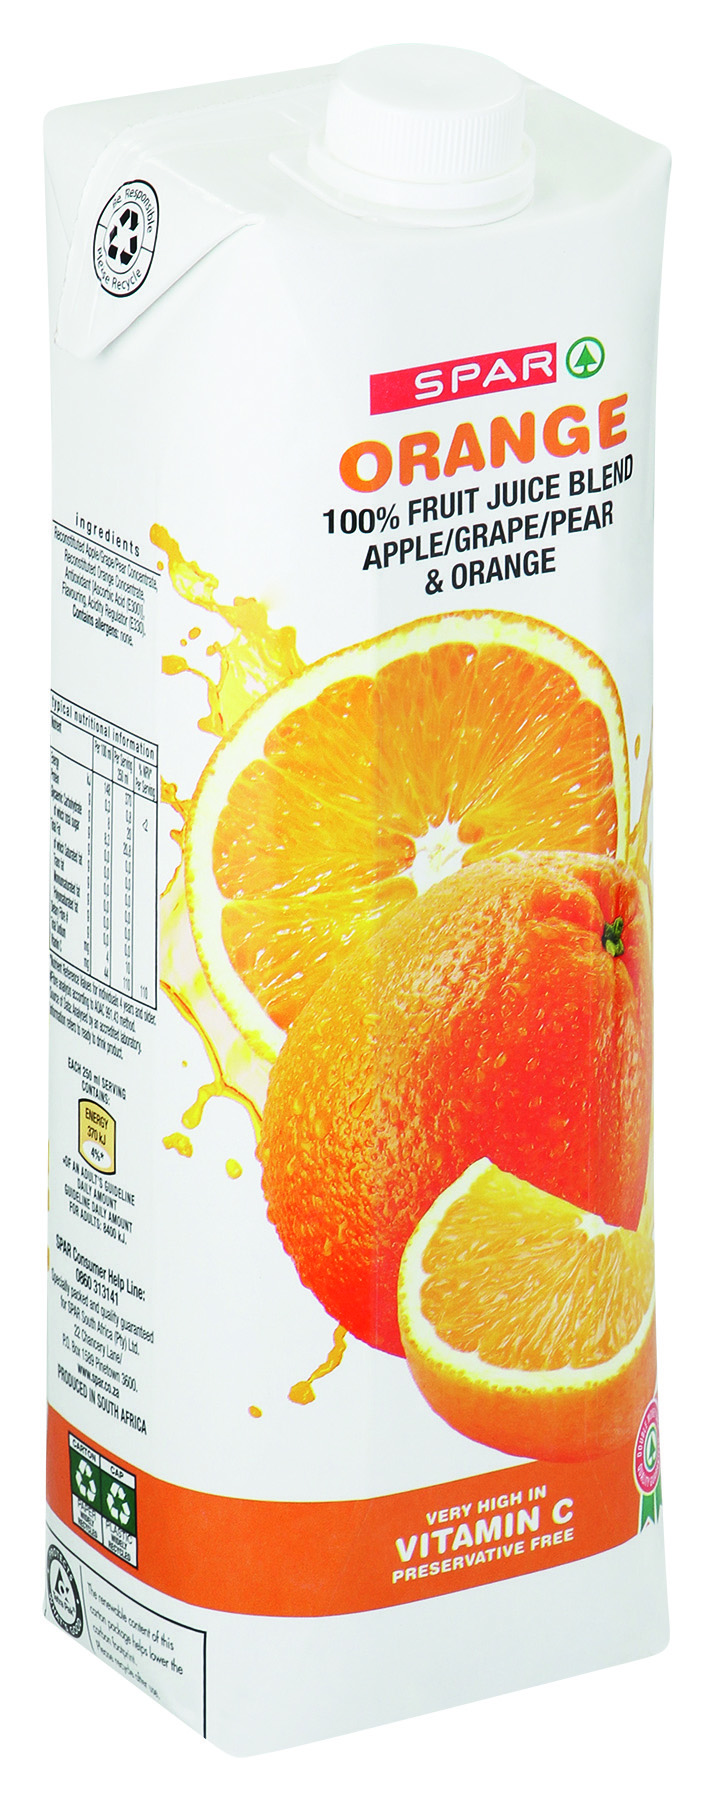 100% fruit juice blend - orange